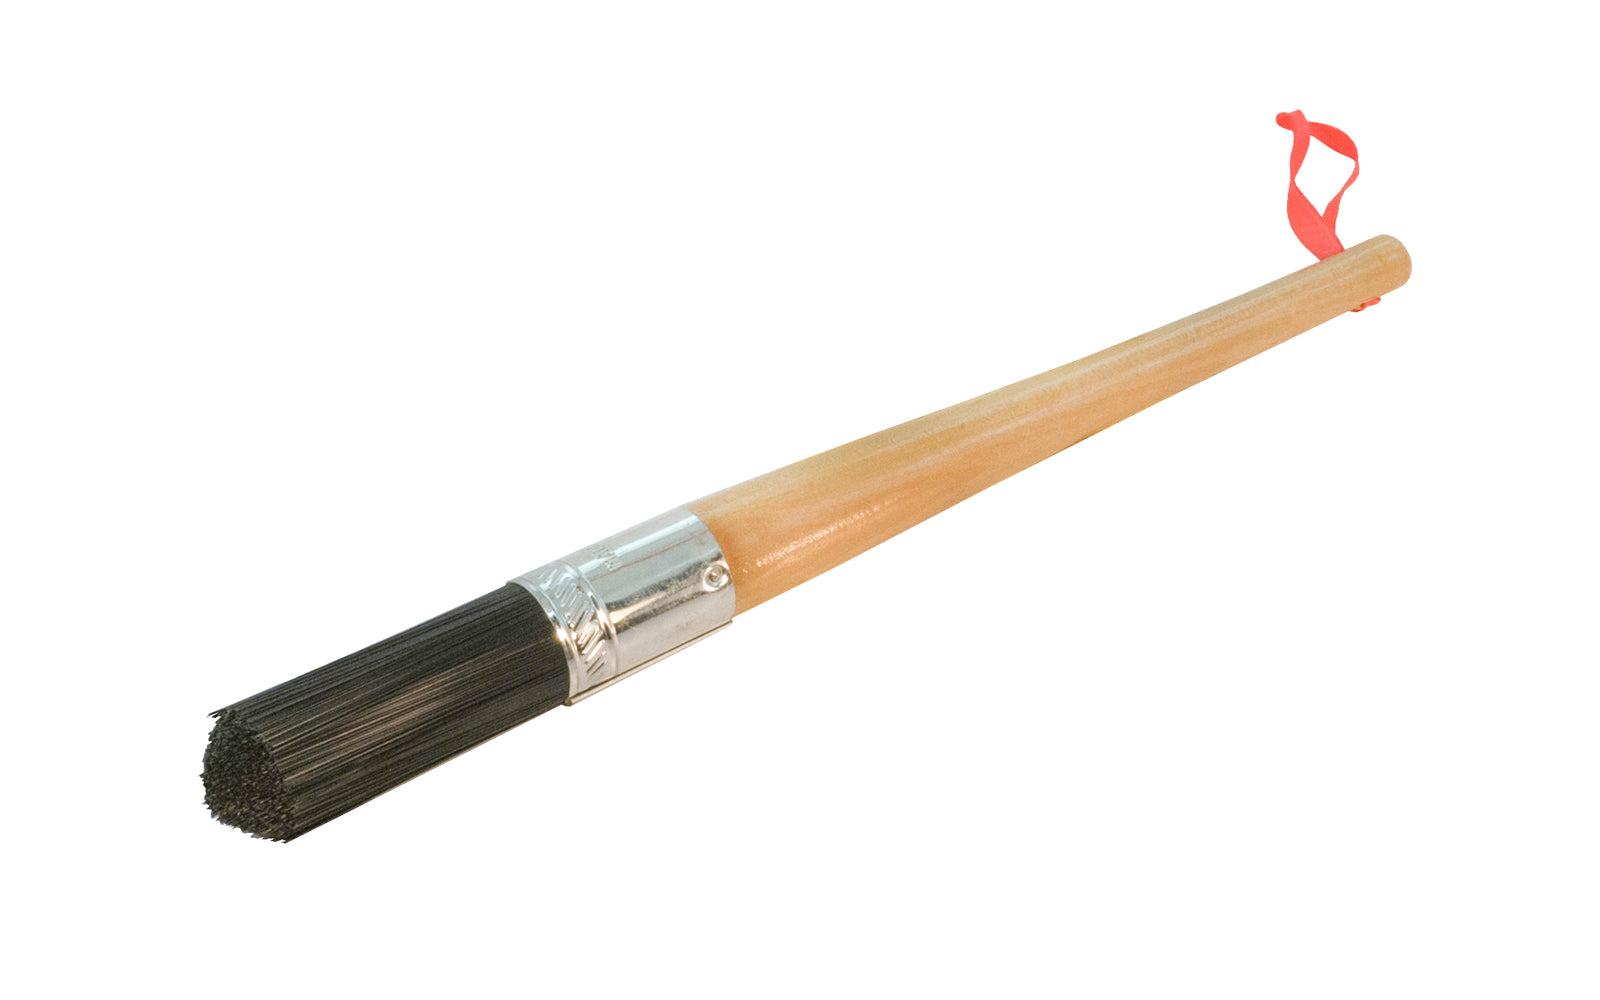  11" Parts Brush with PVC Bristles. Wooden handle. 761605100327. Wisdom 24-PB-1